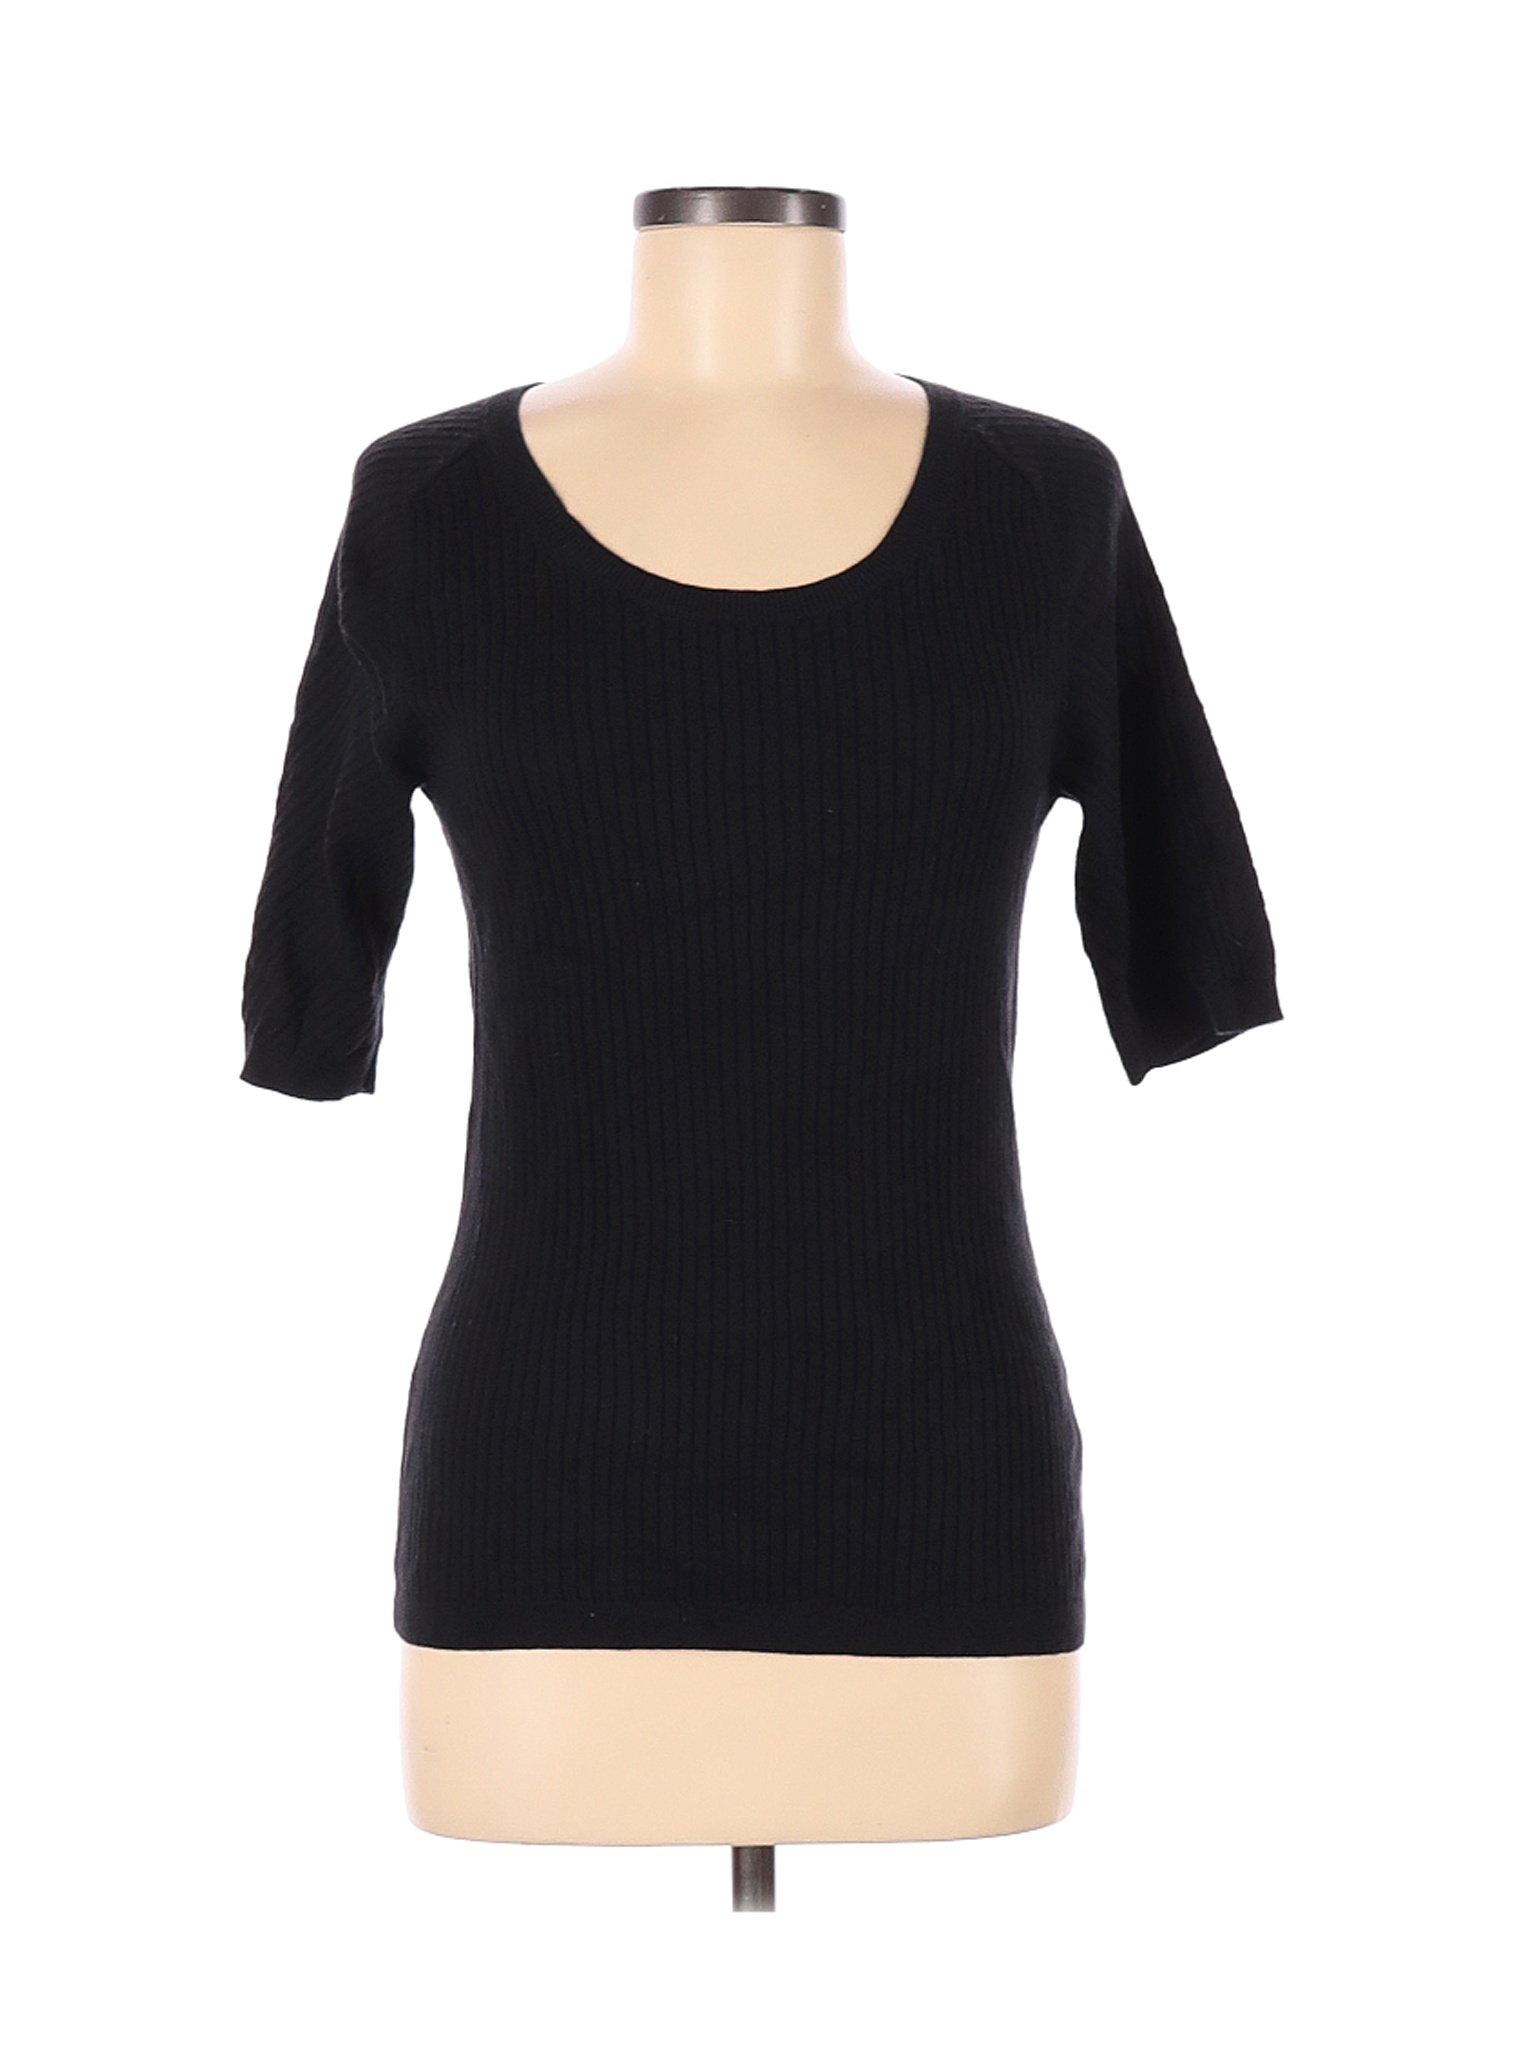 Lands' End Women Black Pullover Sweater L | eBay